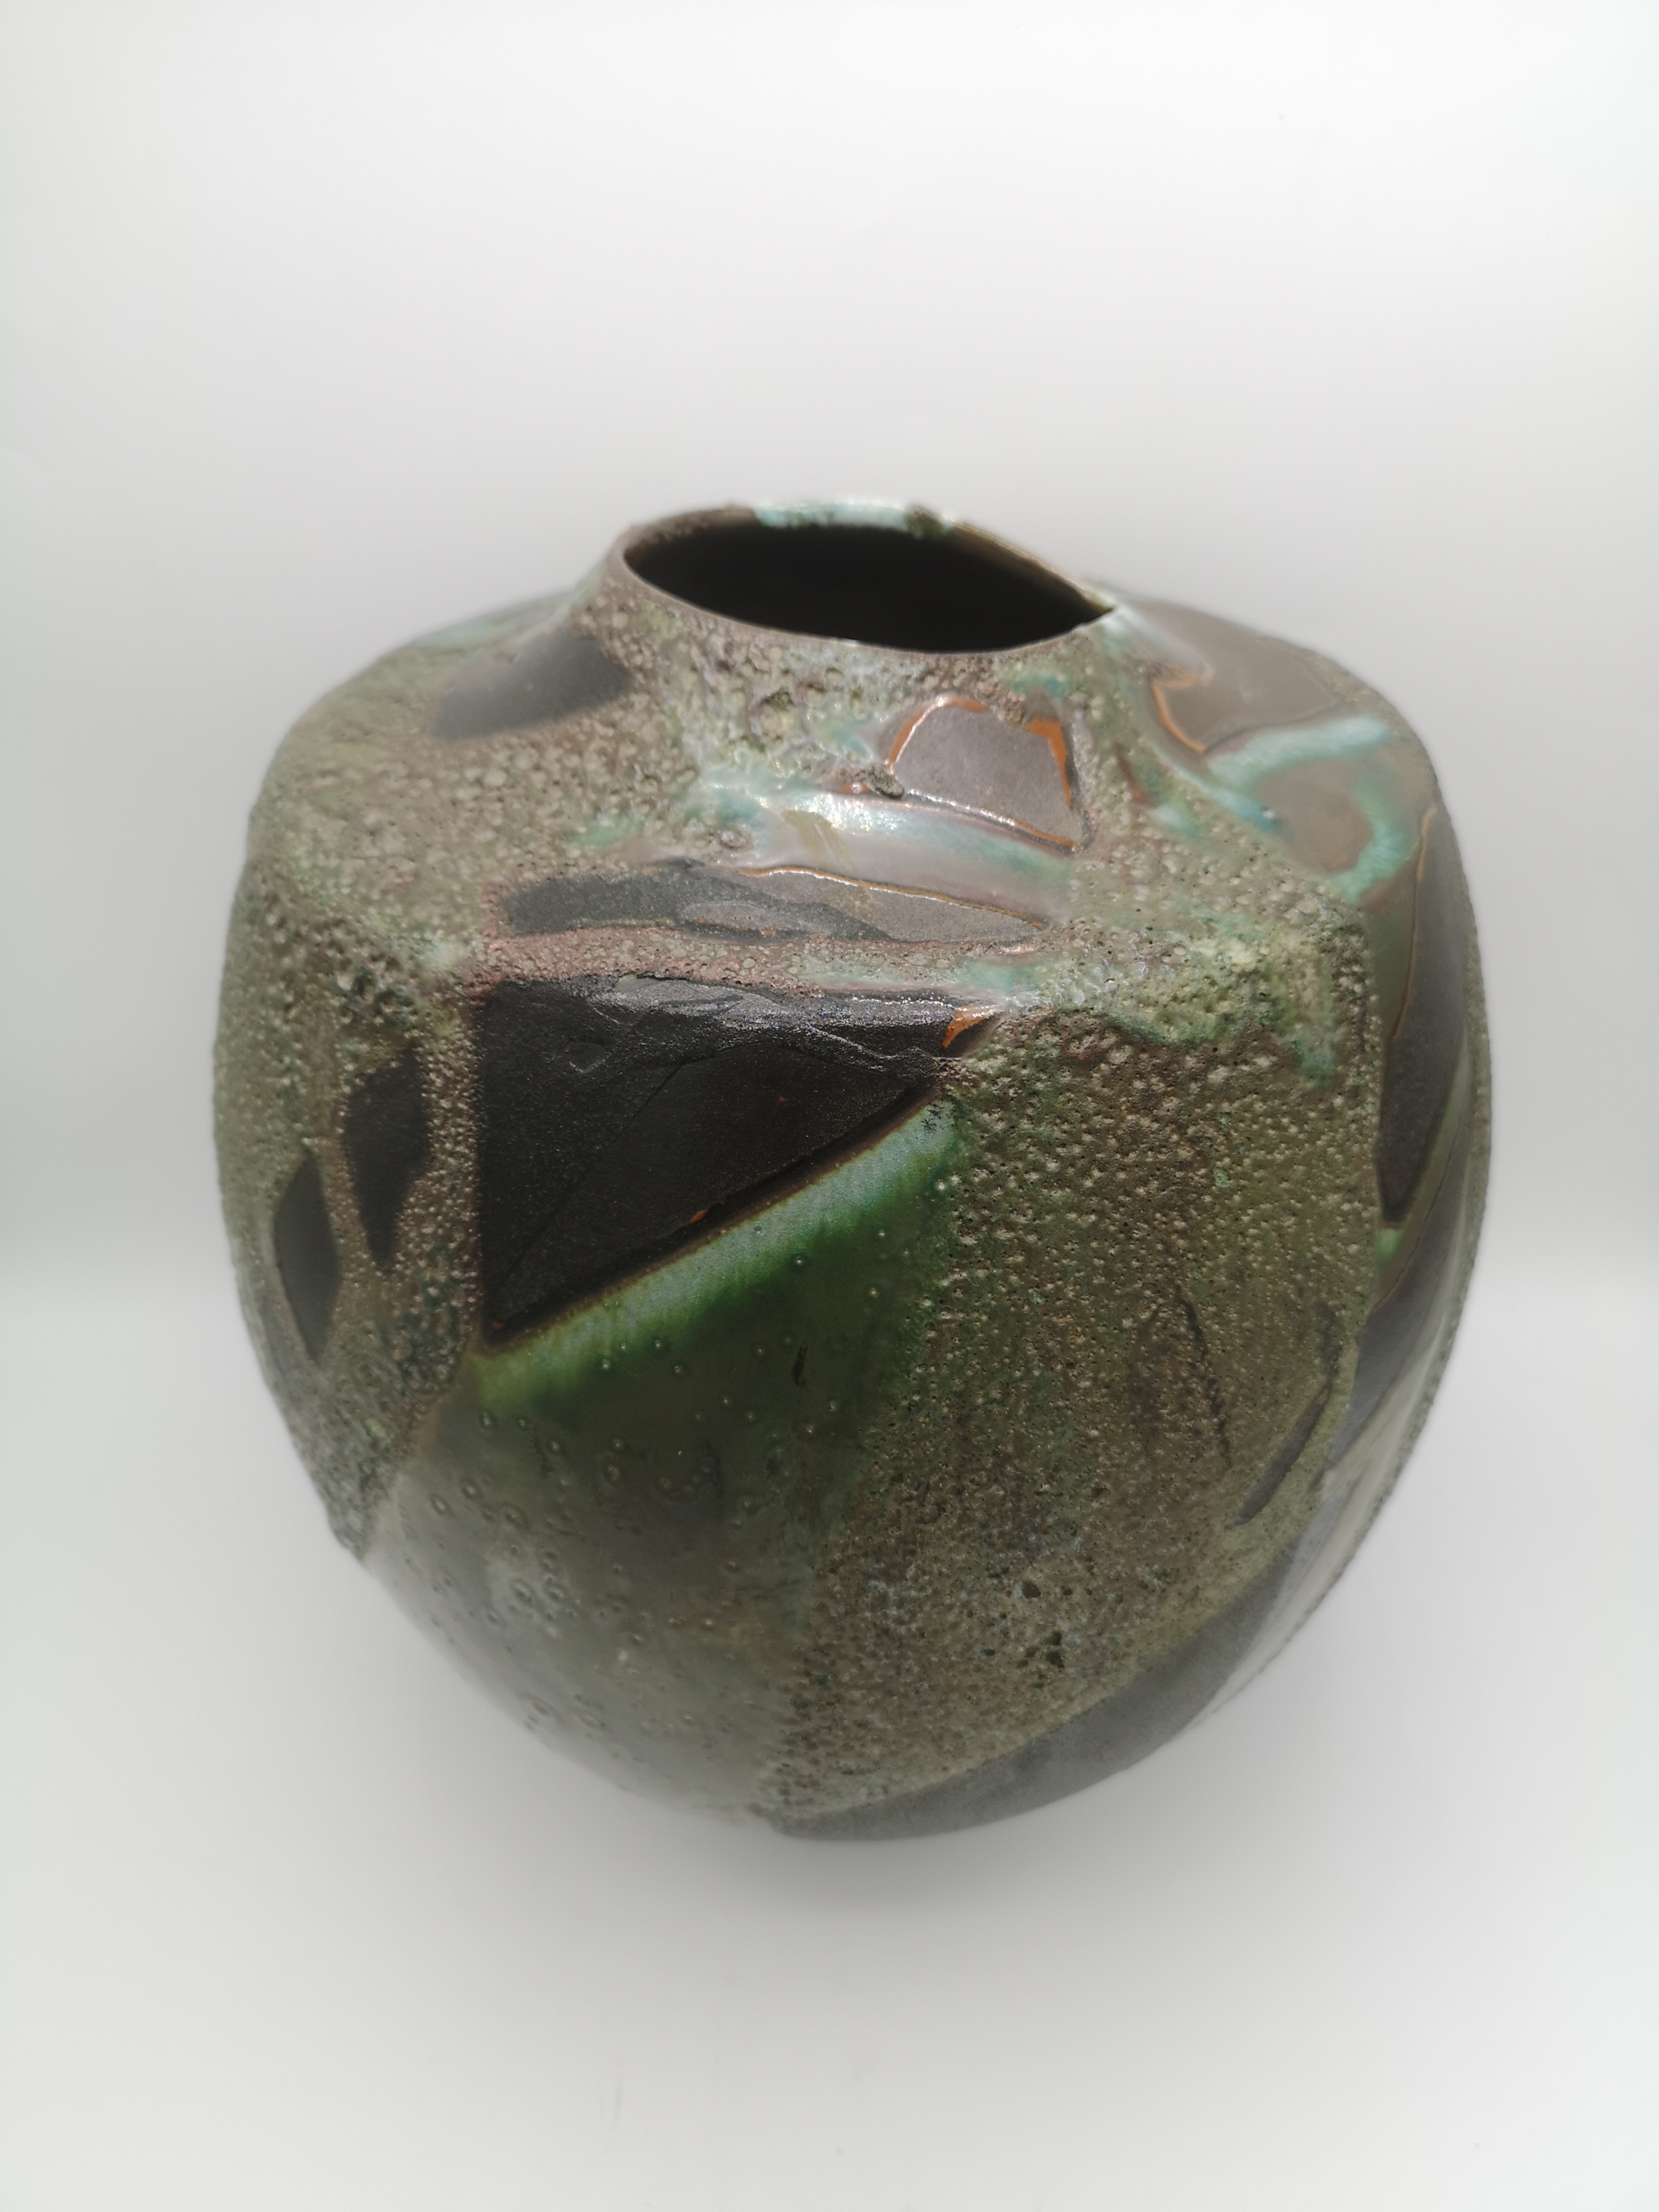 Ceramic raku vase by Tony Evans - Image 4 of 8